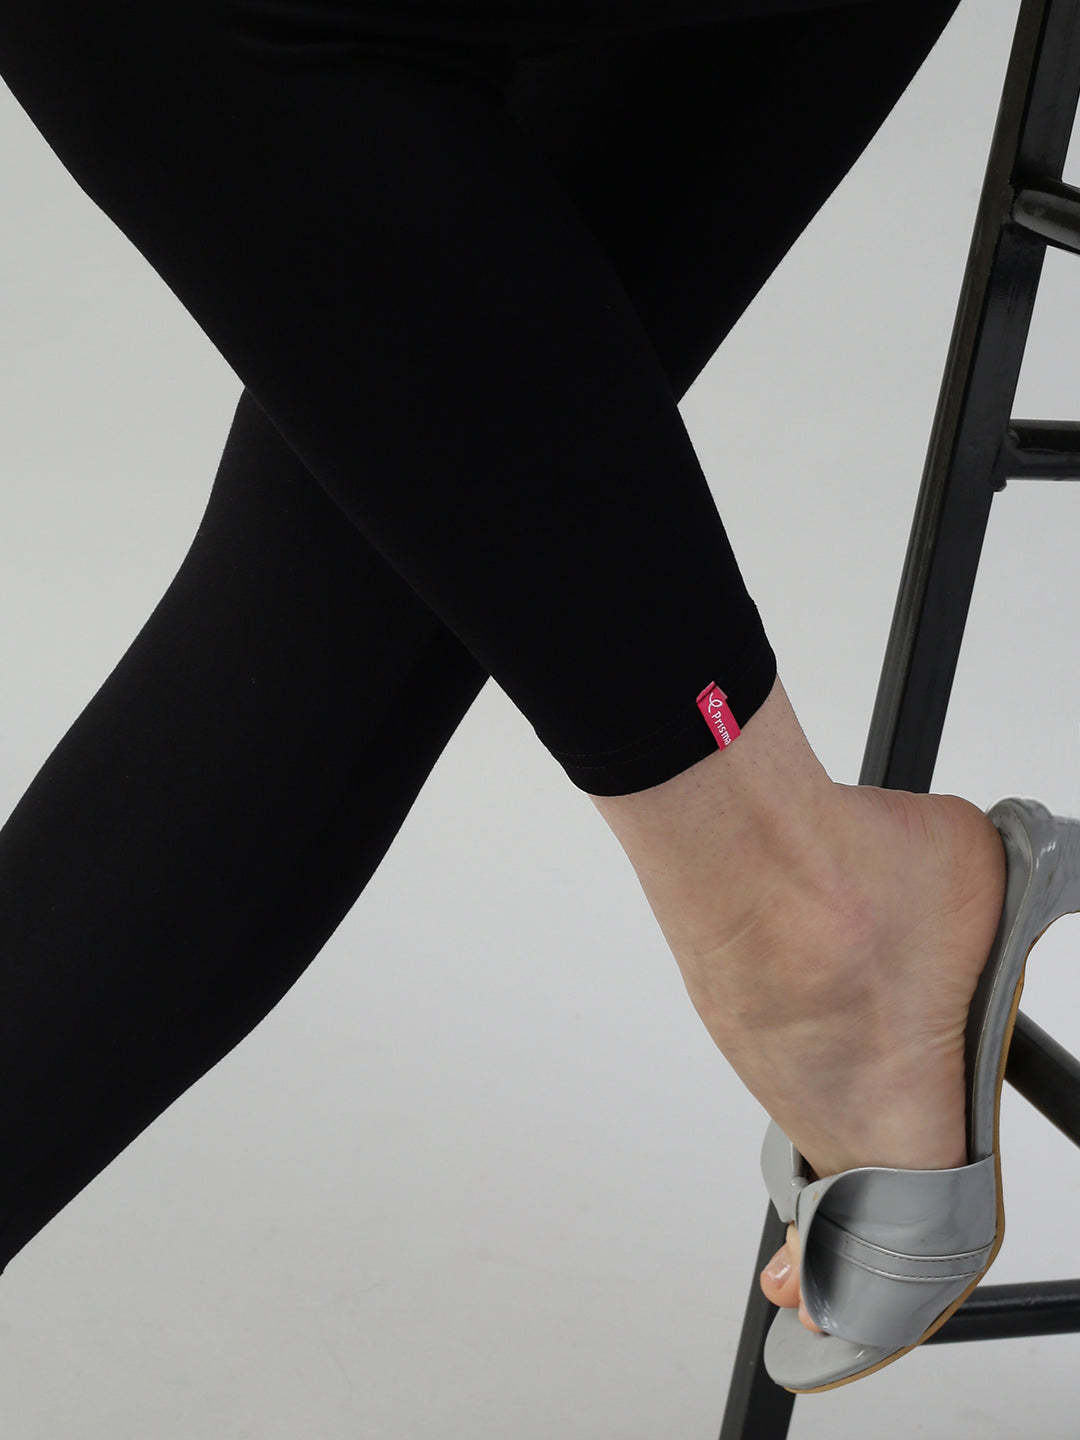 Prisma's Indigo Ankle Leggings - Comfortable and Stylish